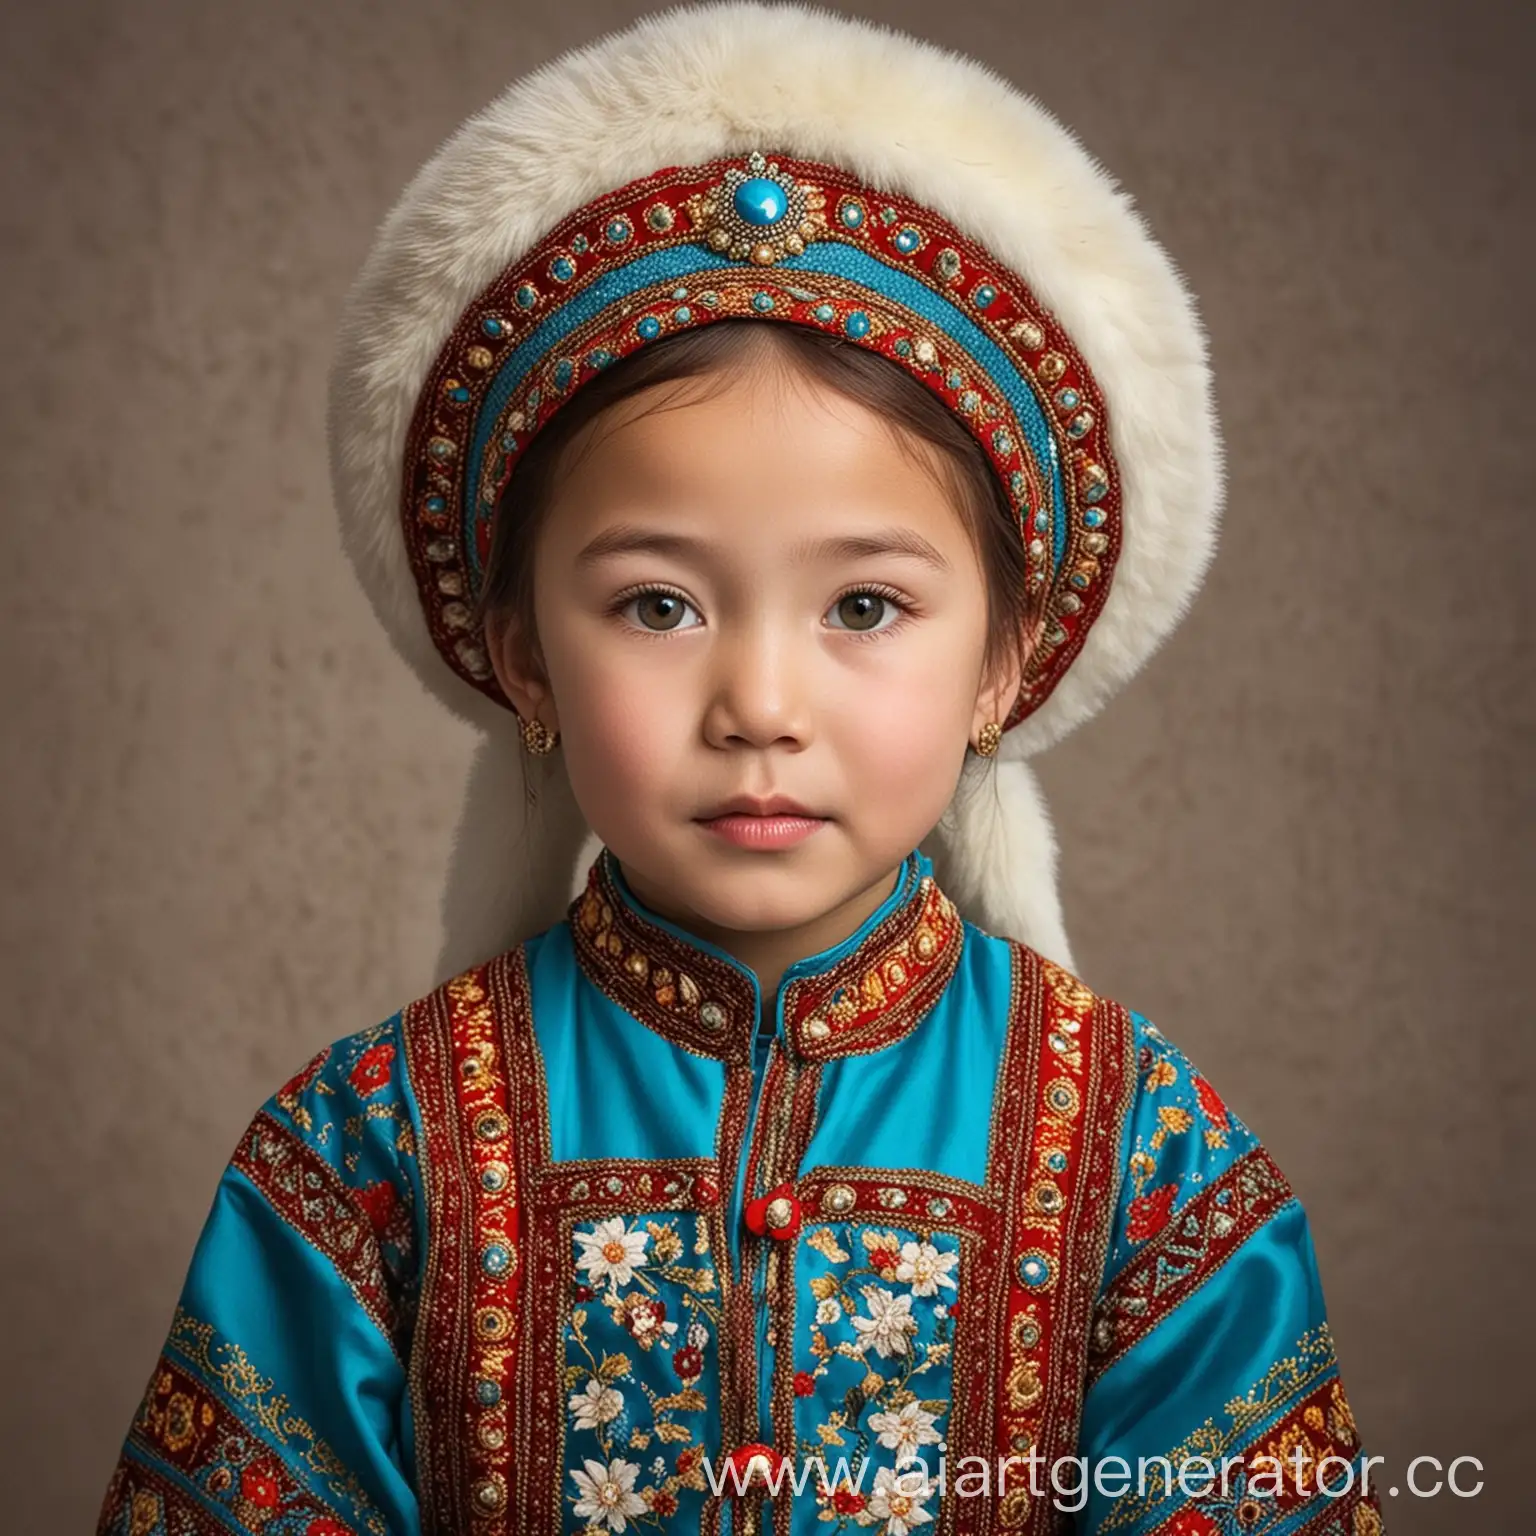 Kazakh-Child-Wearing-Traditional-Russian-Costume